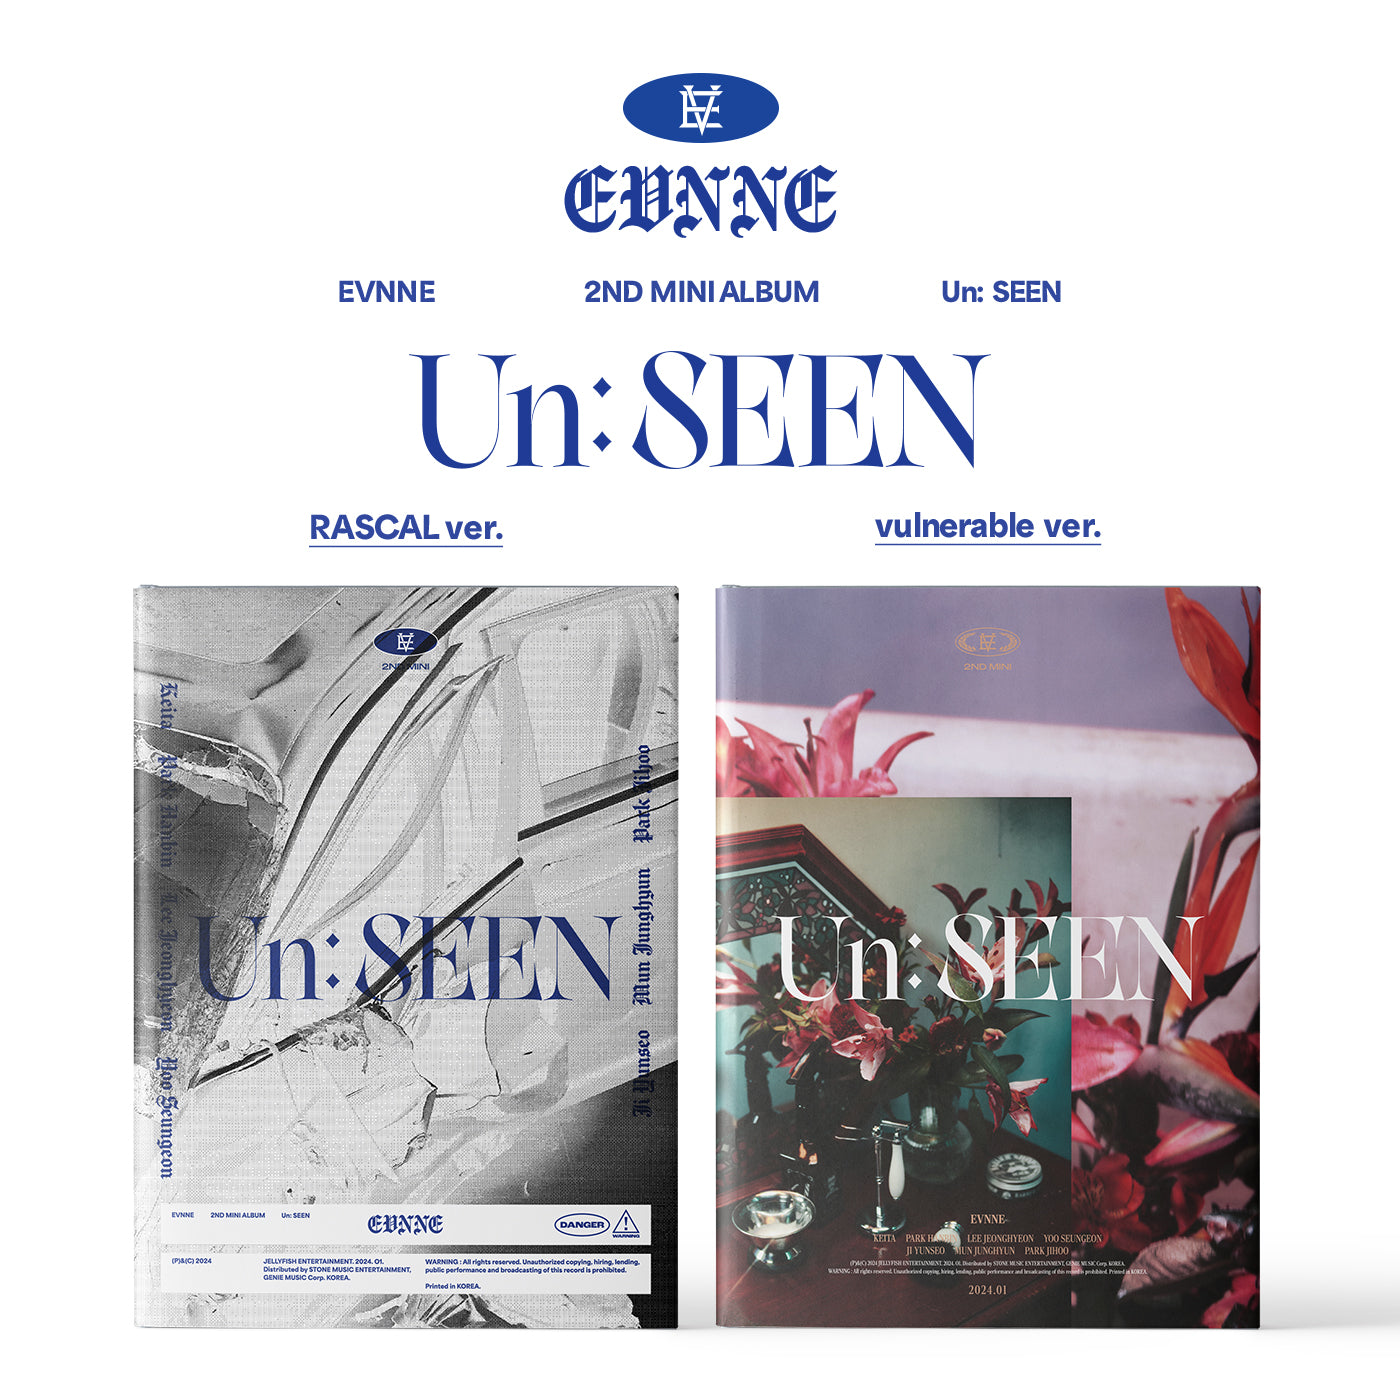 EVNNE - 2nd Mini Album Un: SEEN